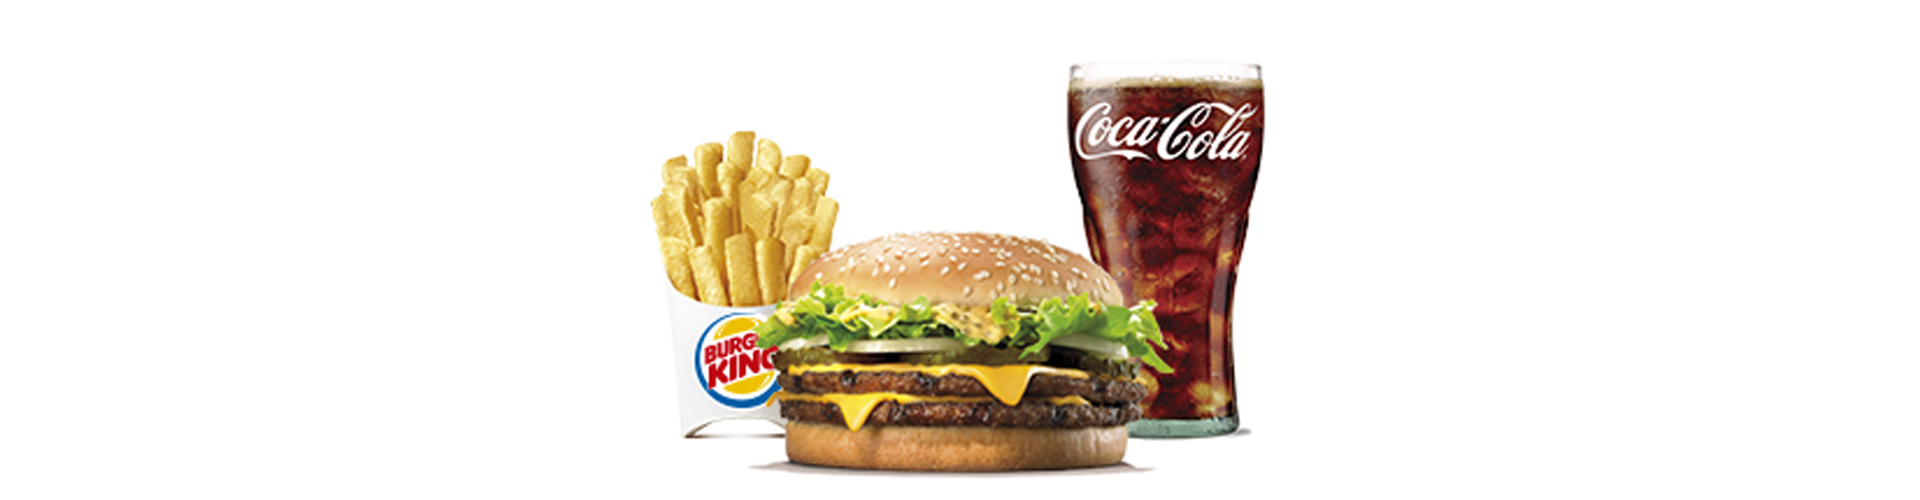 menu-big-king-burgerking-40001712-agua-aros